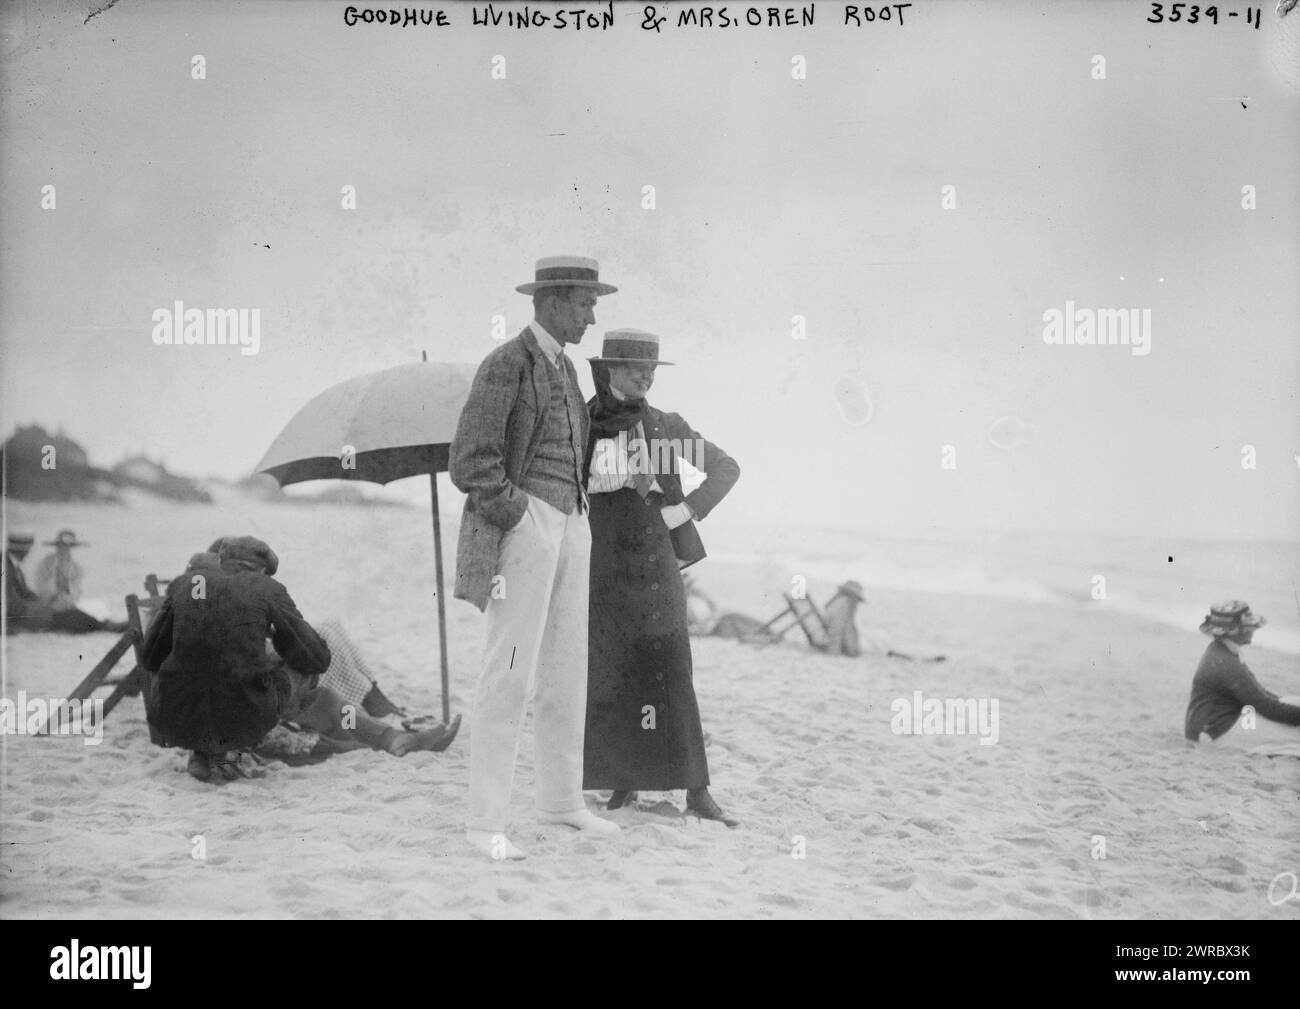 Goodhue Livingston e Mrs. Oren Root, tra ca. 1910 e ca. 1915, Glass negative, 1 negativo: Glass Foto Stock